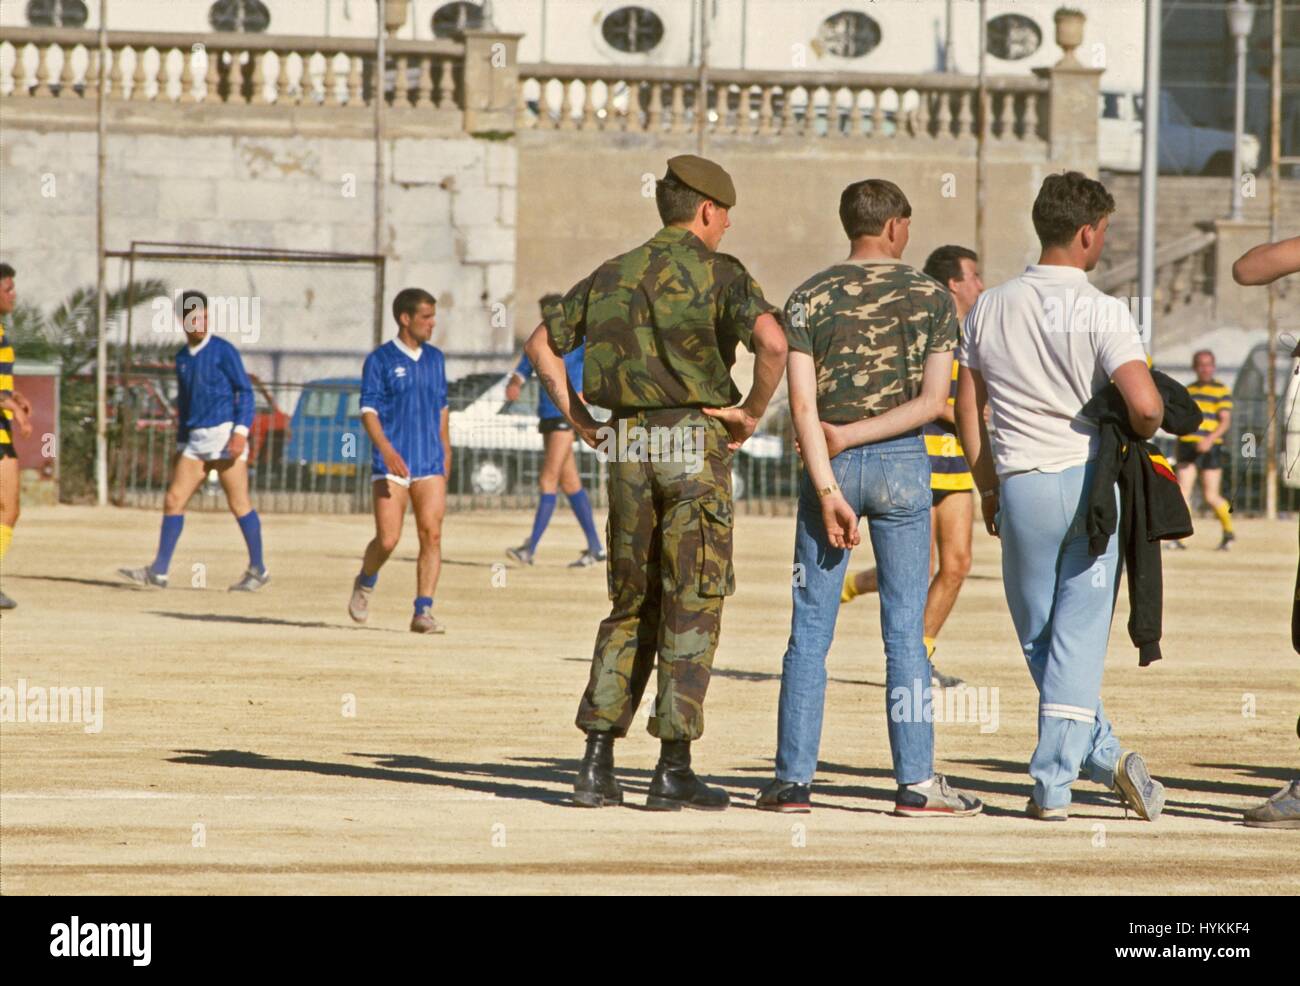 Gibraltar, football match between British soldiers Stock Photo